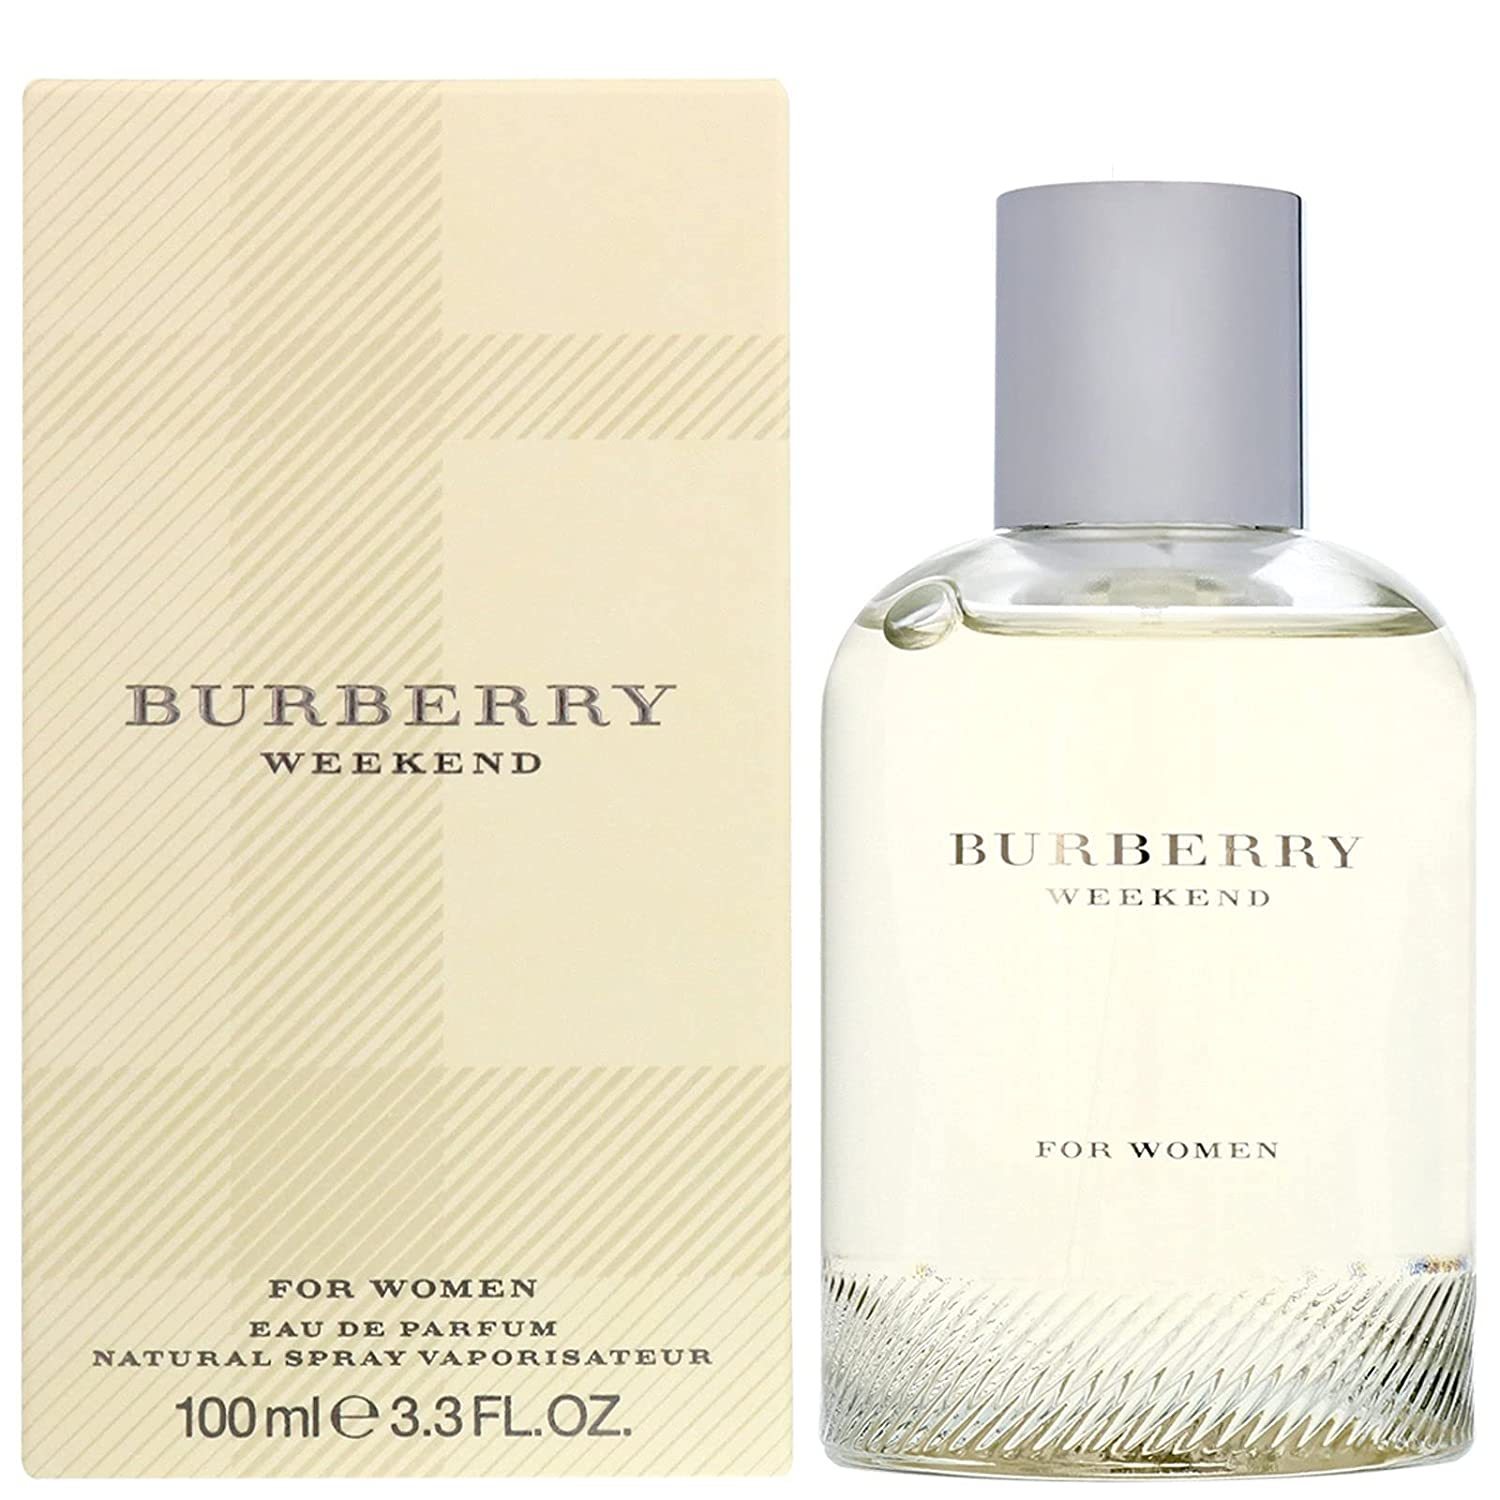 Primary image for New BURBERRY Weekend Eau De Parfum for Women